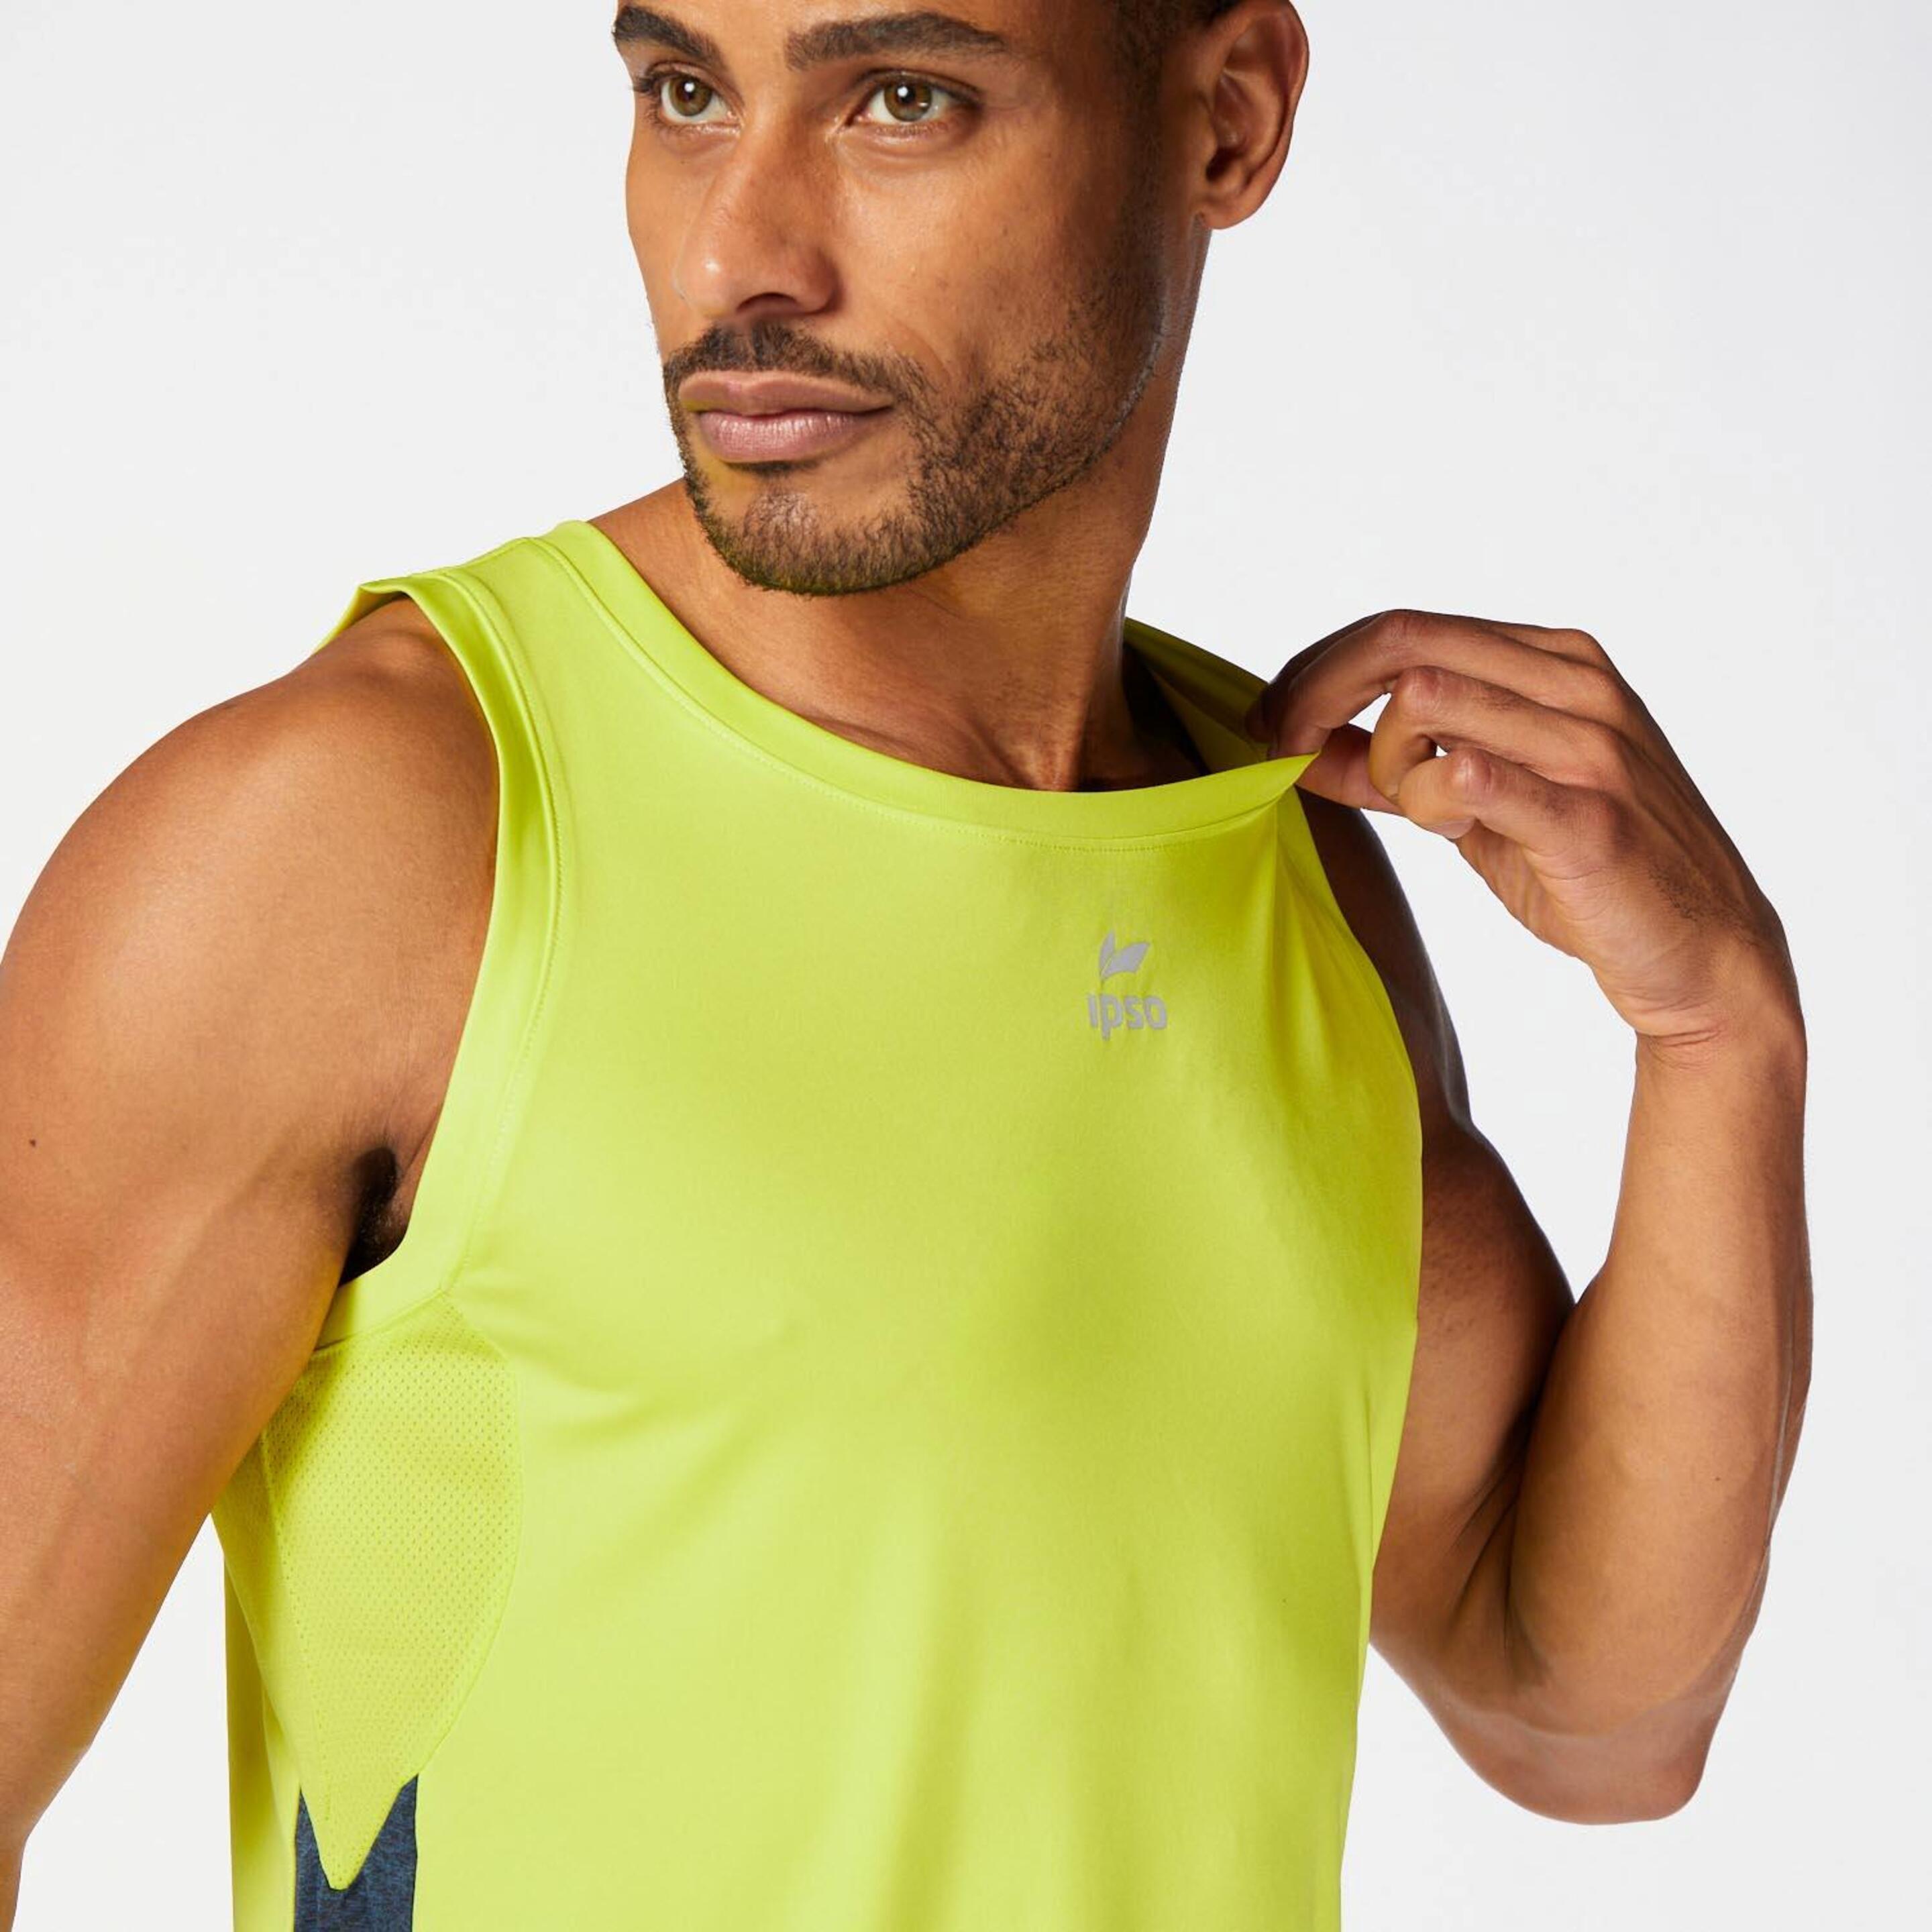 Camiseta Running Ipso - Lima - Camiseta Tirantes Hombre